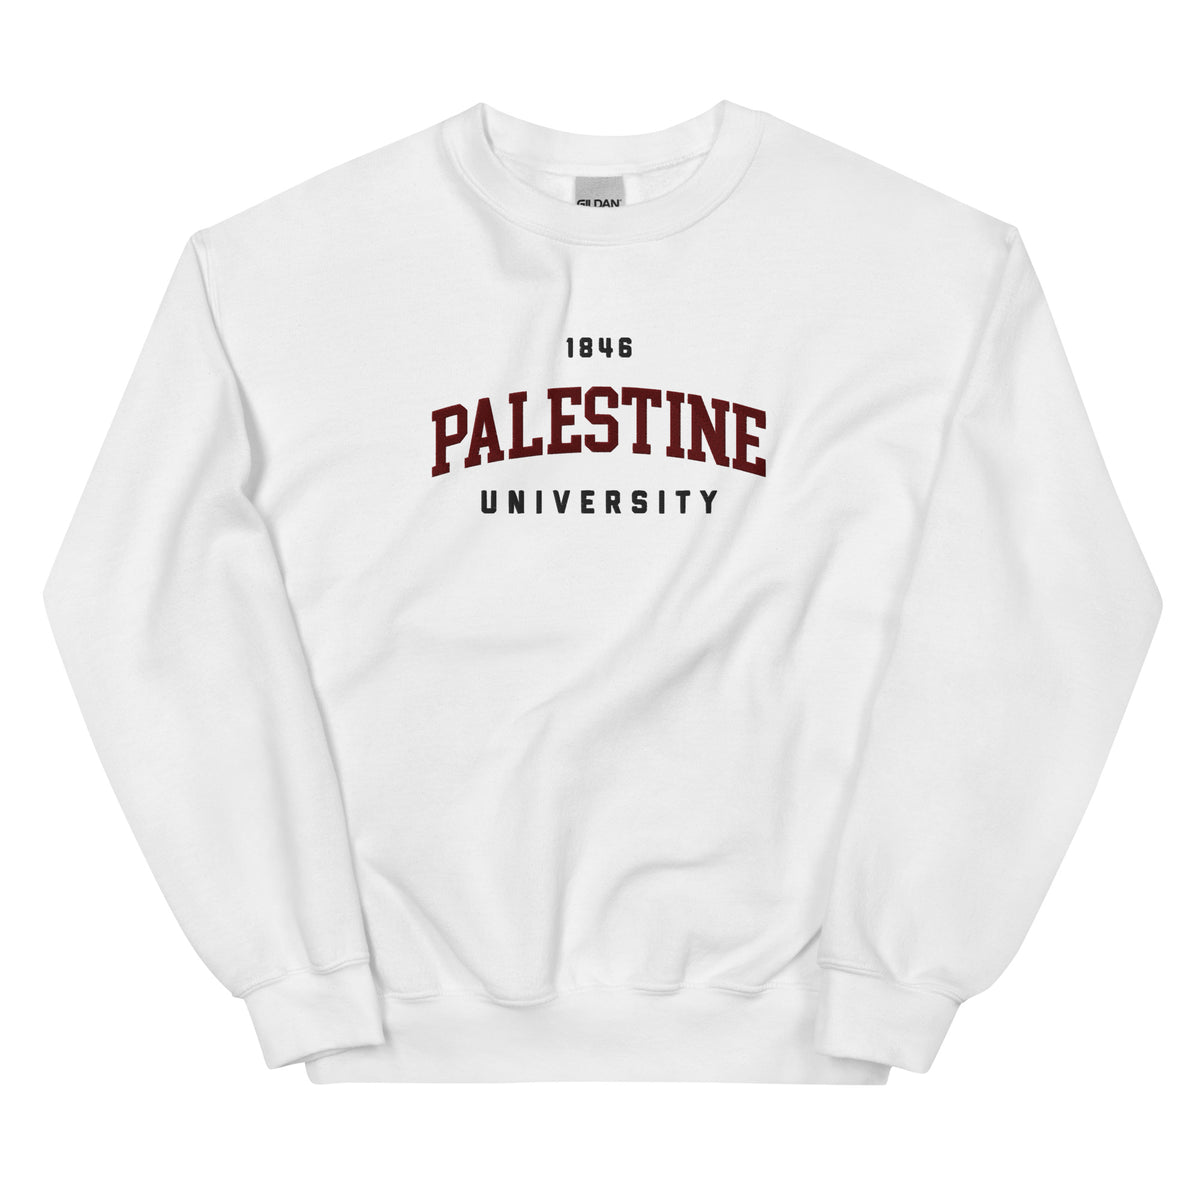 Palestine University 1846 sweatshirt in white by Dar Collective